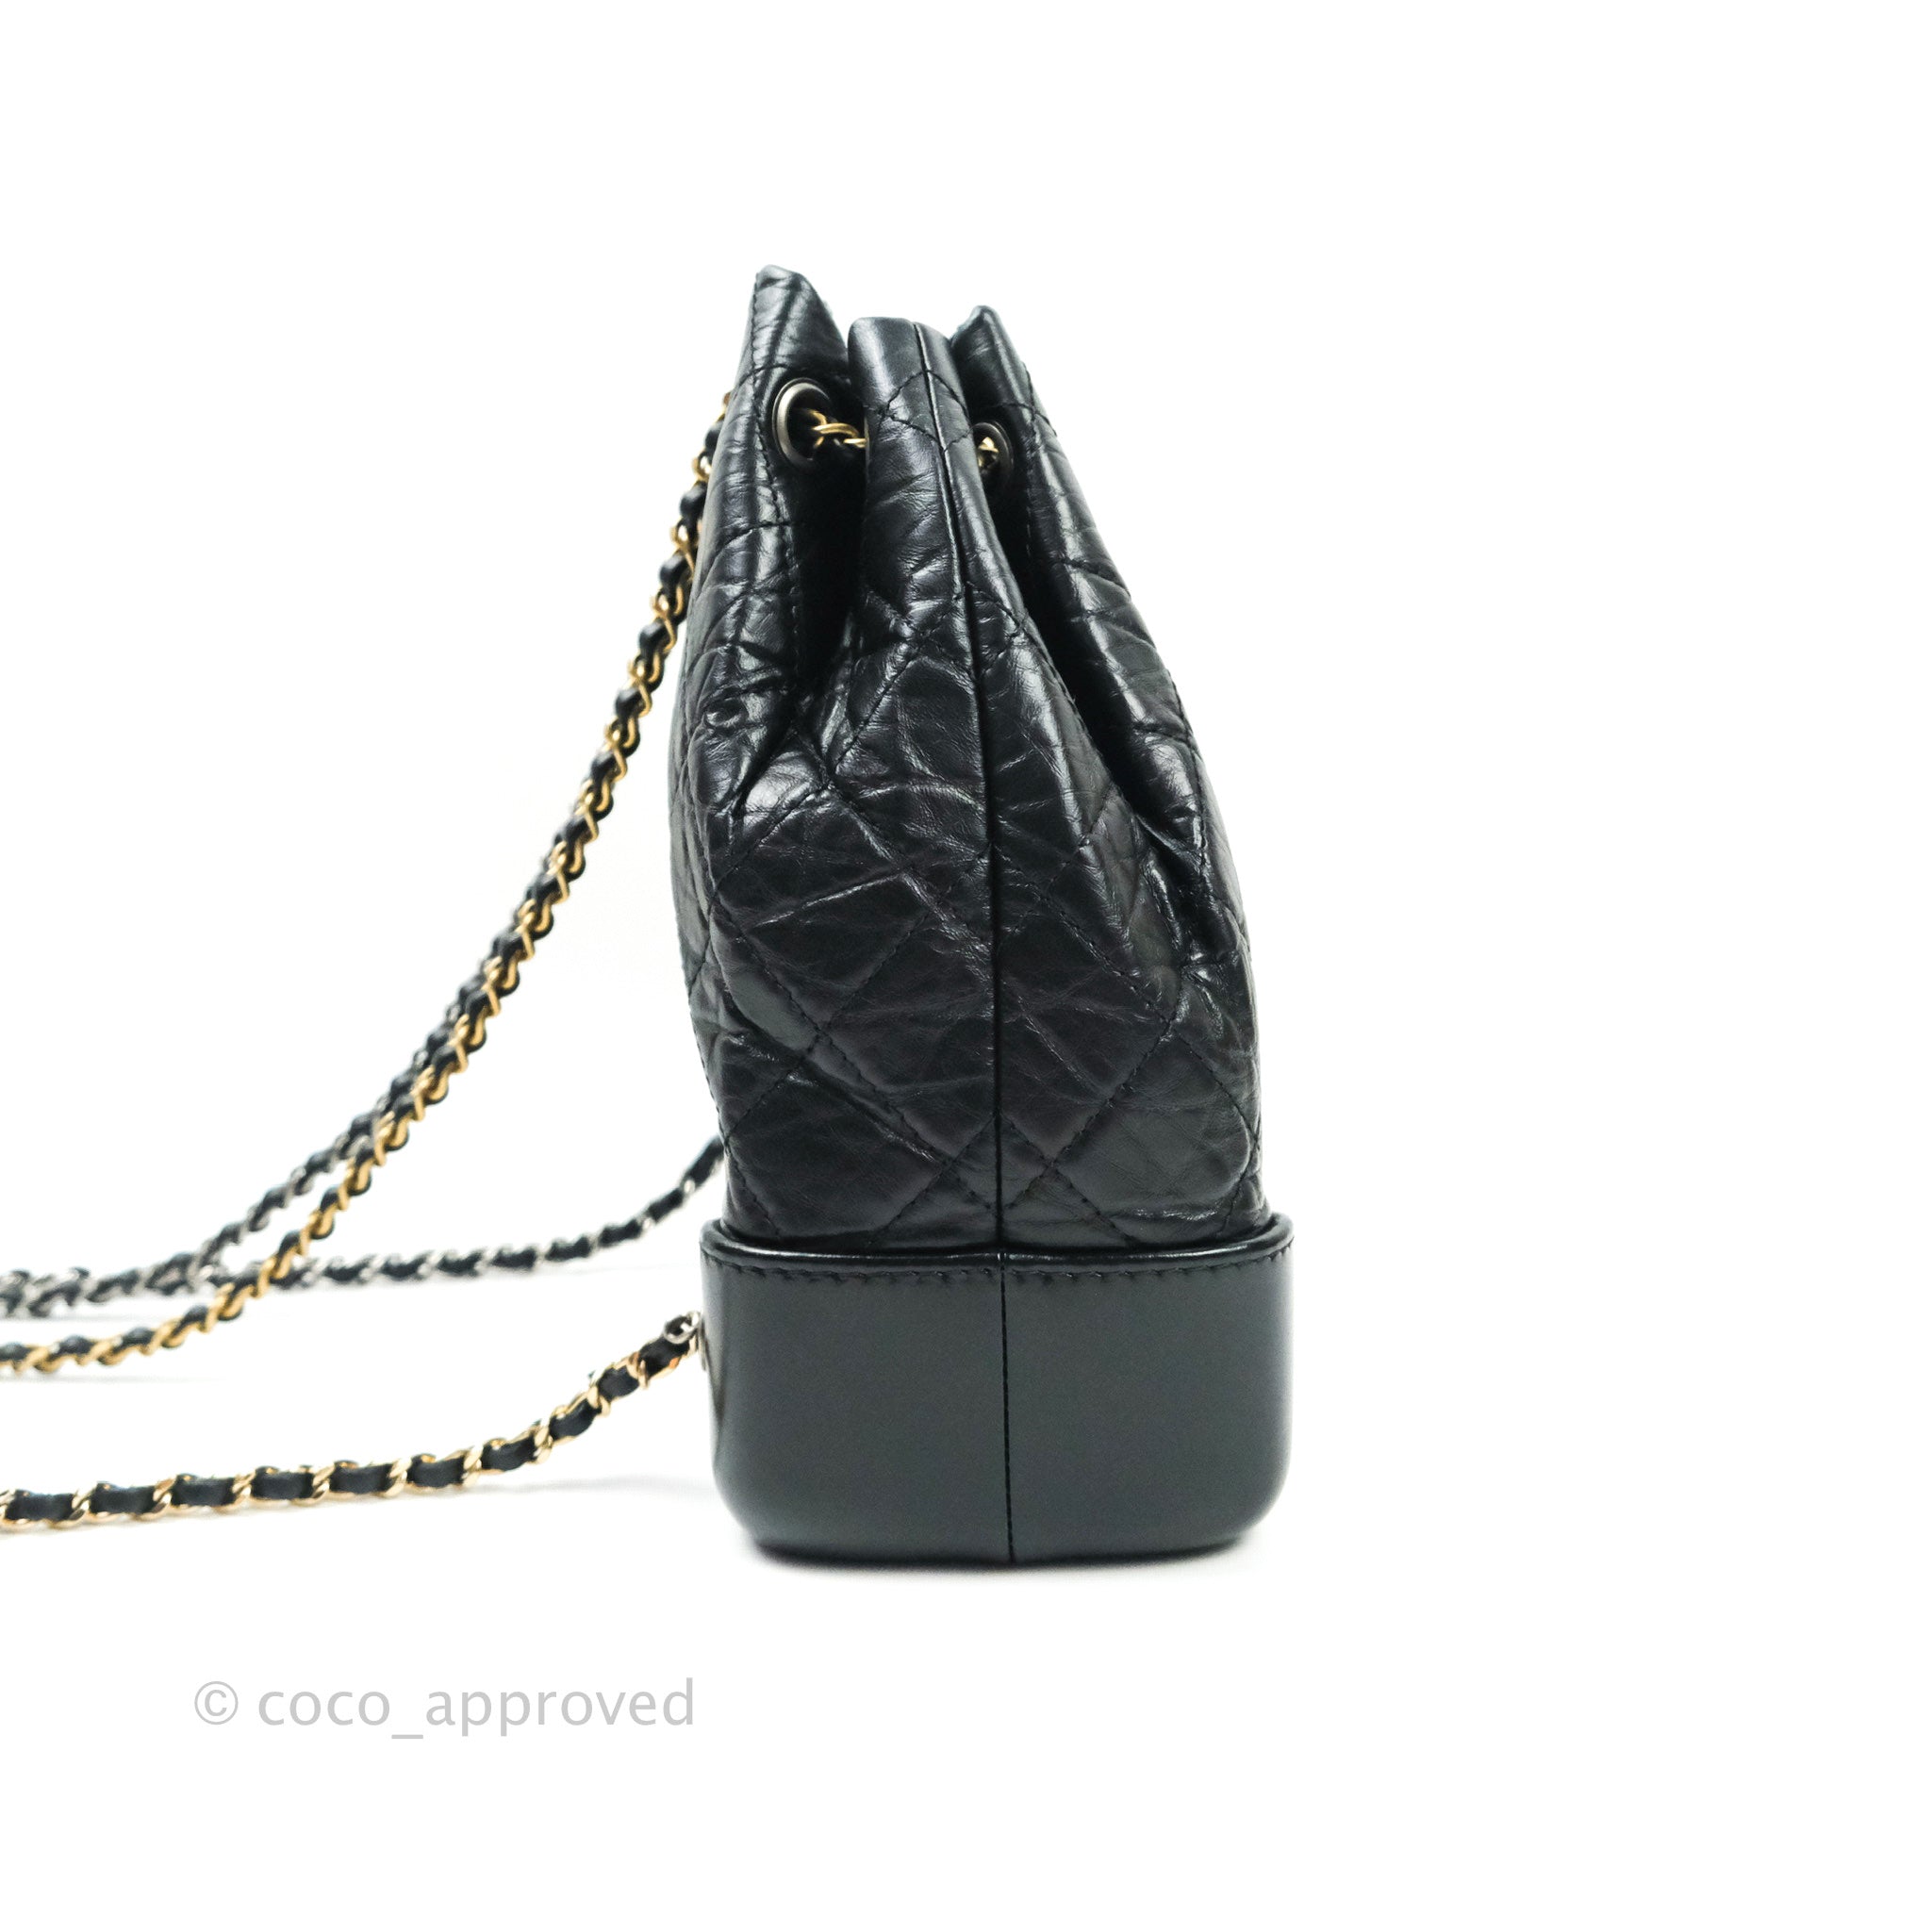 Chanel Gabrielle Bag Small - Blk & Wht